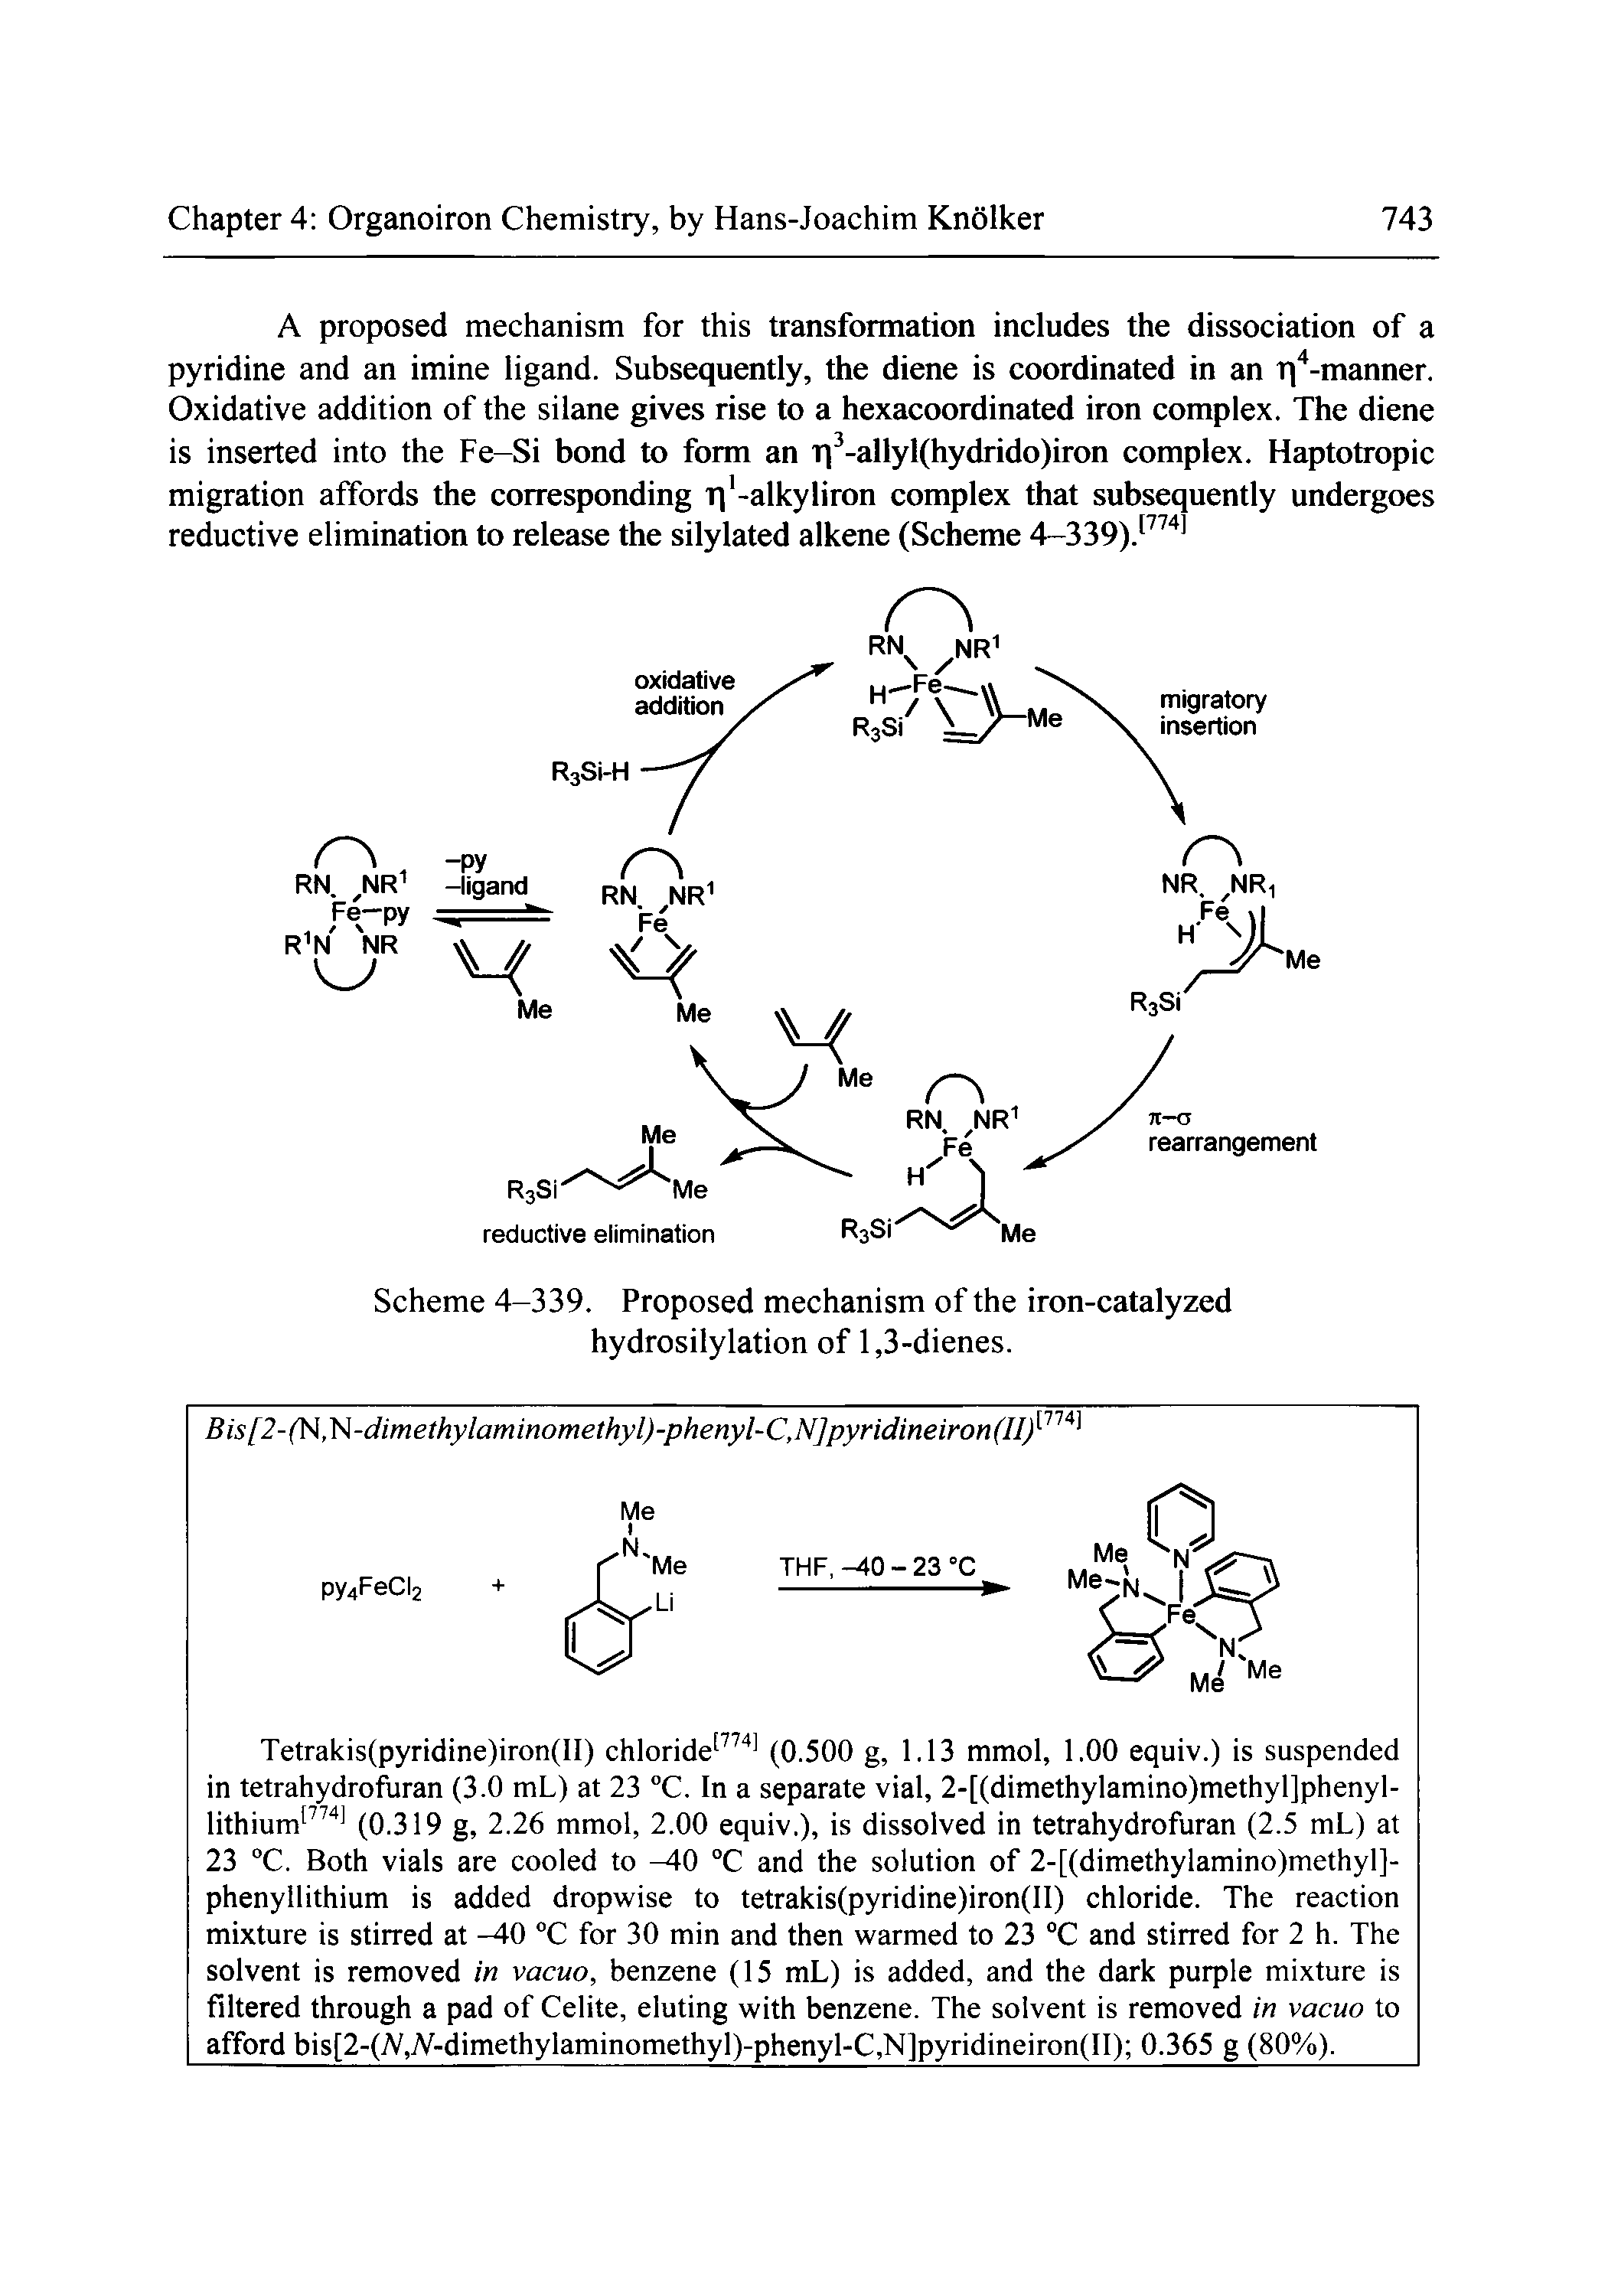 Scheme 4-339. Proposed mechanism of the iron-catalyzed hydrosilylation of 1,3-dienes.